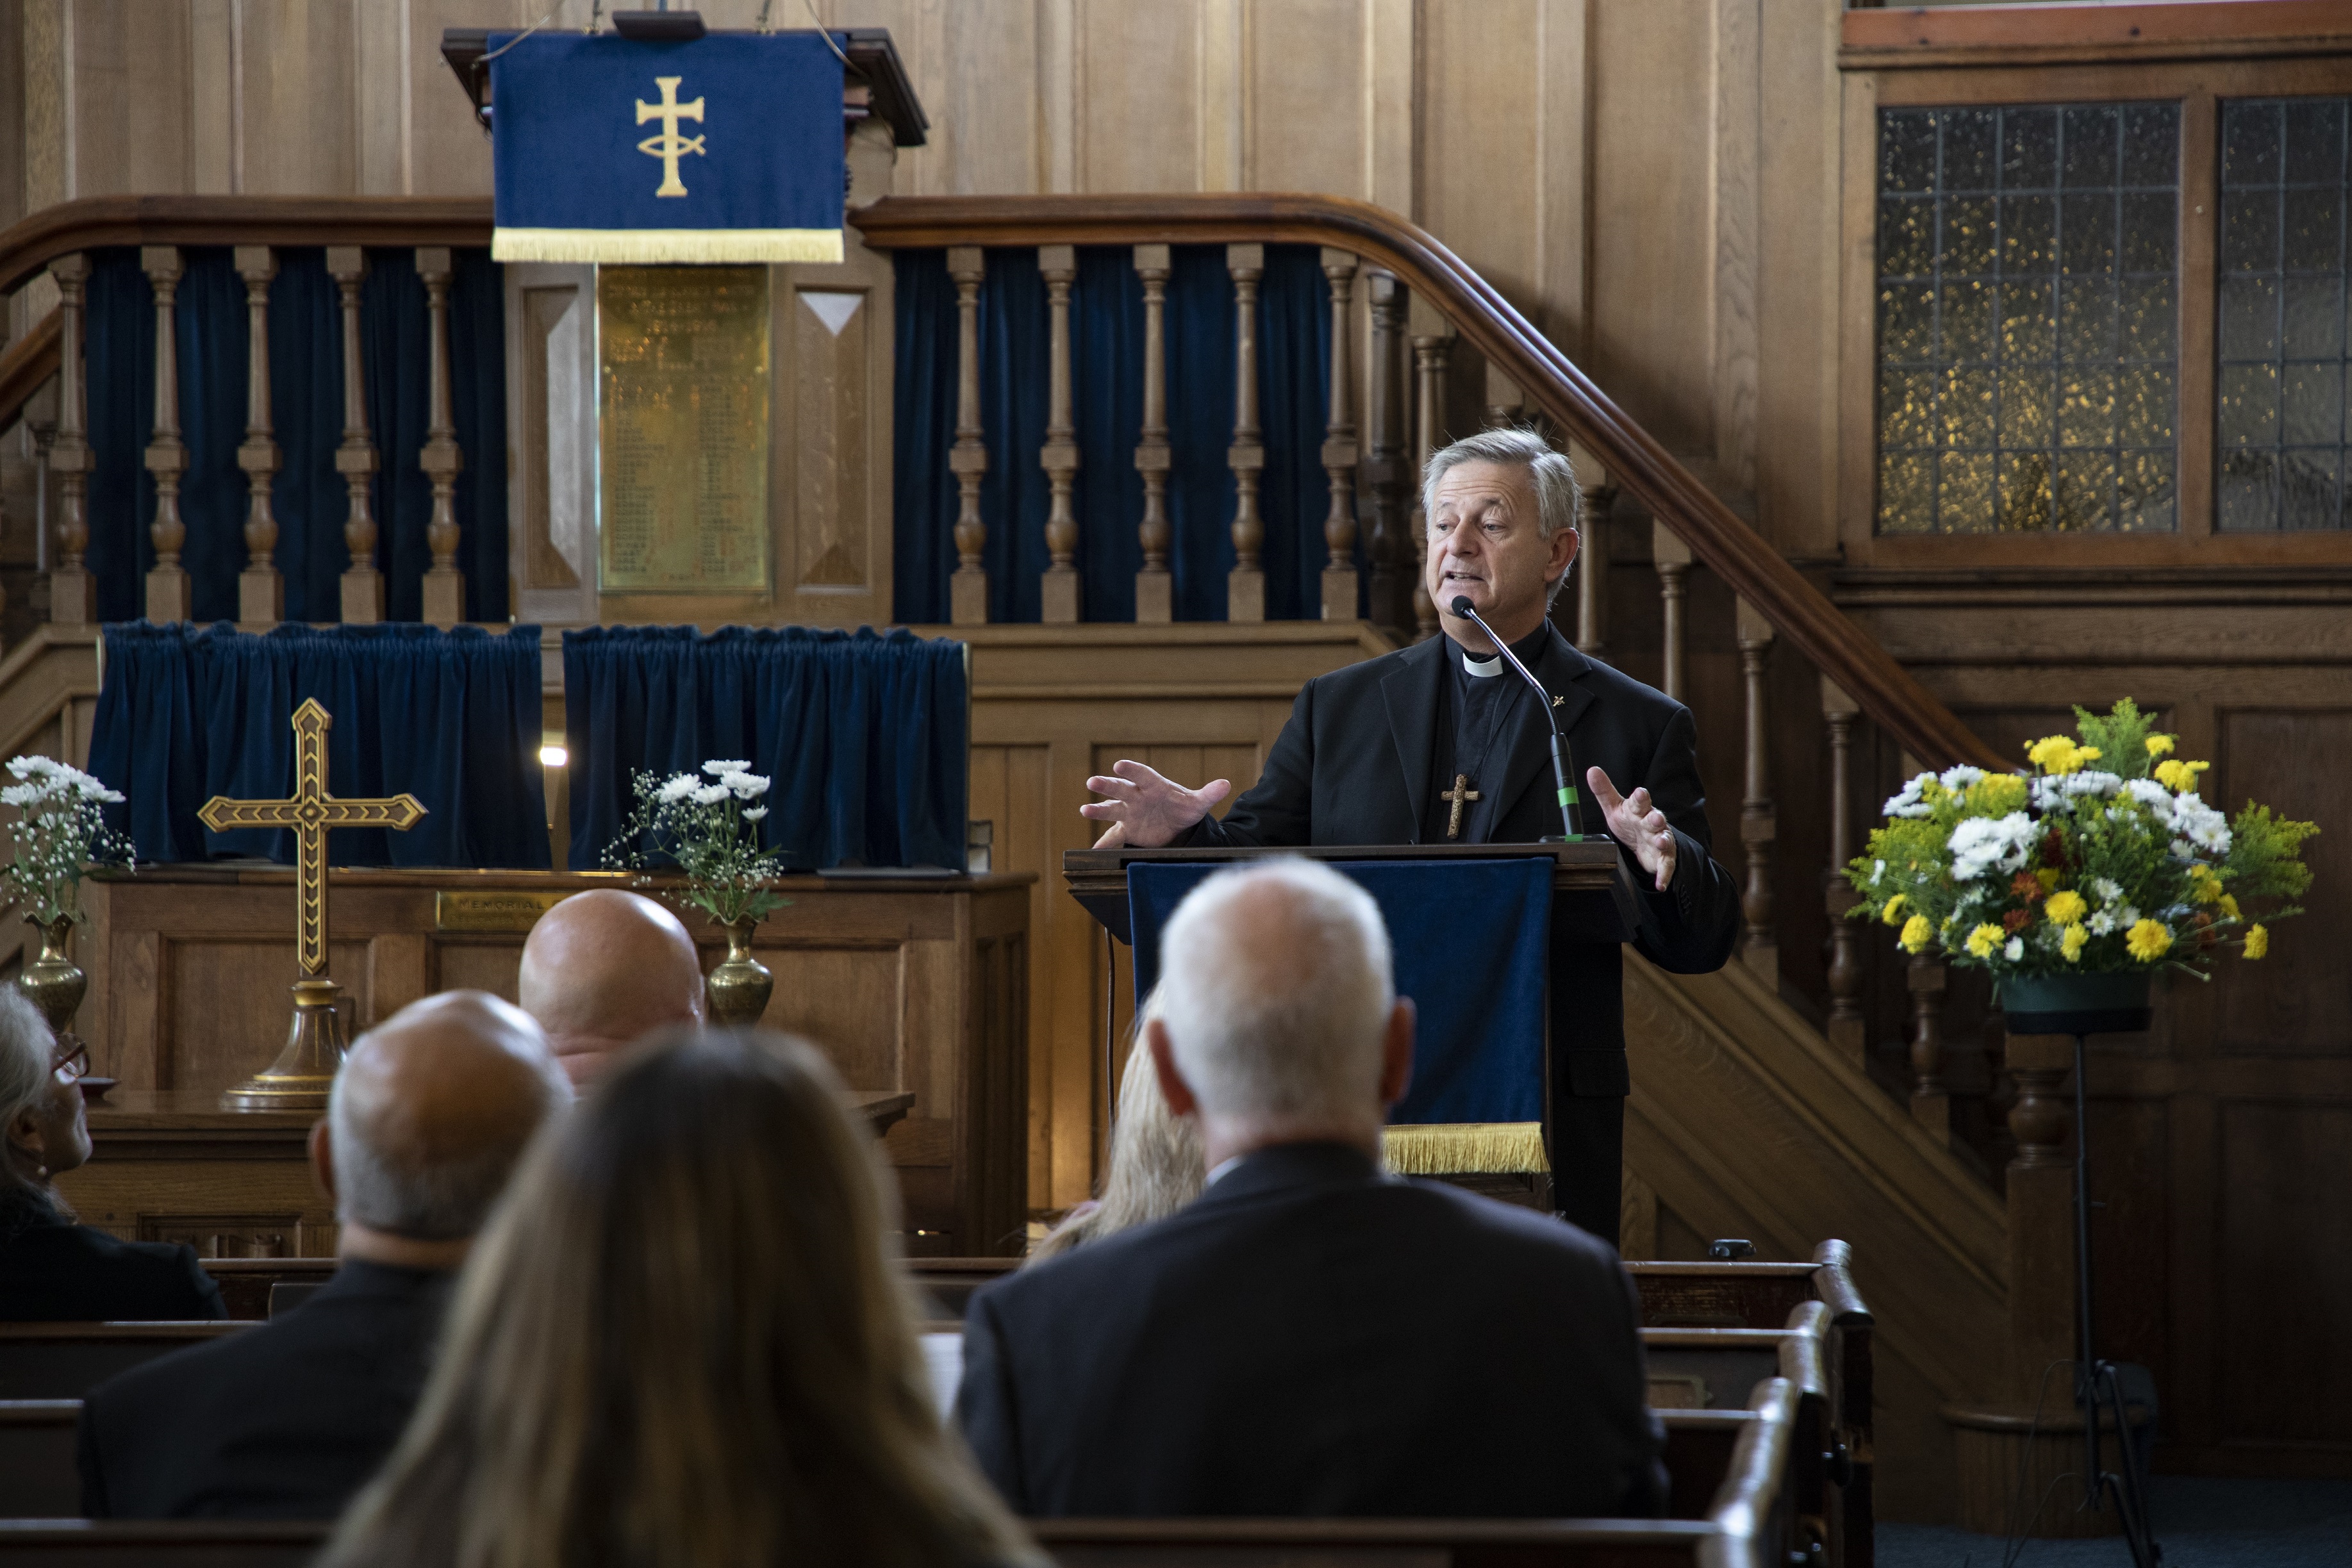 Reverend Doctor Peter Stevenson addresses the congregation